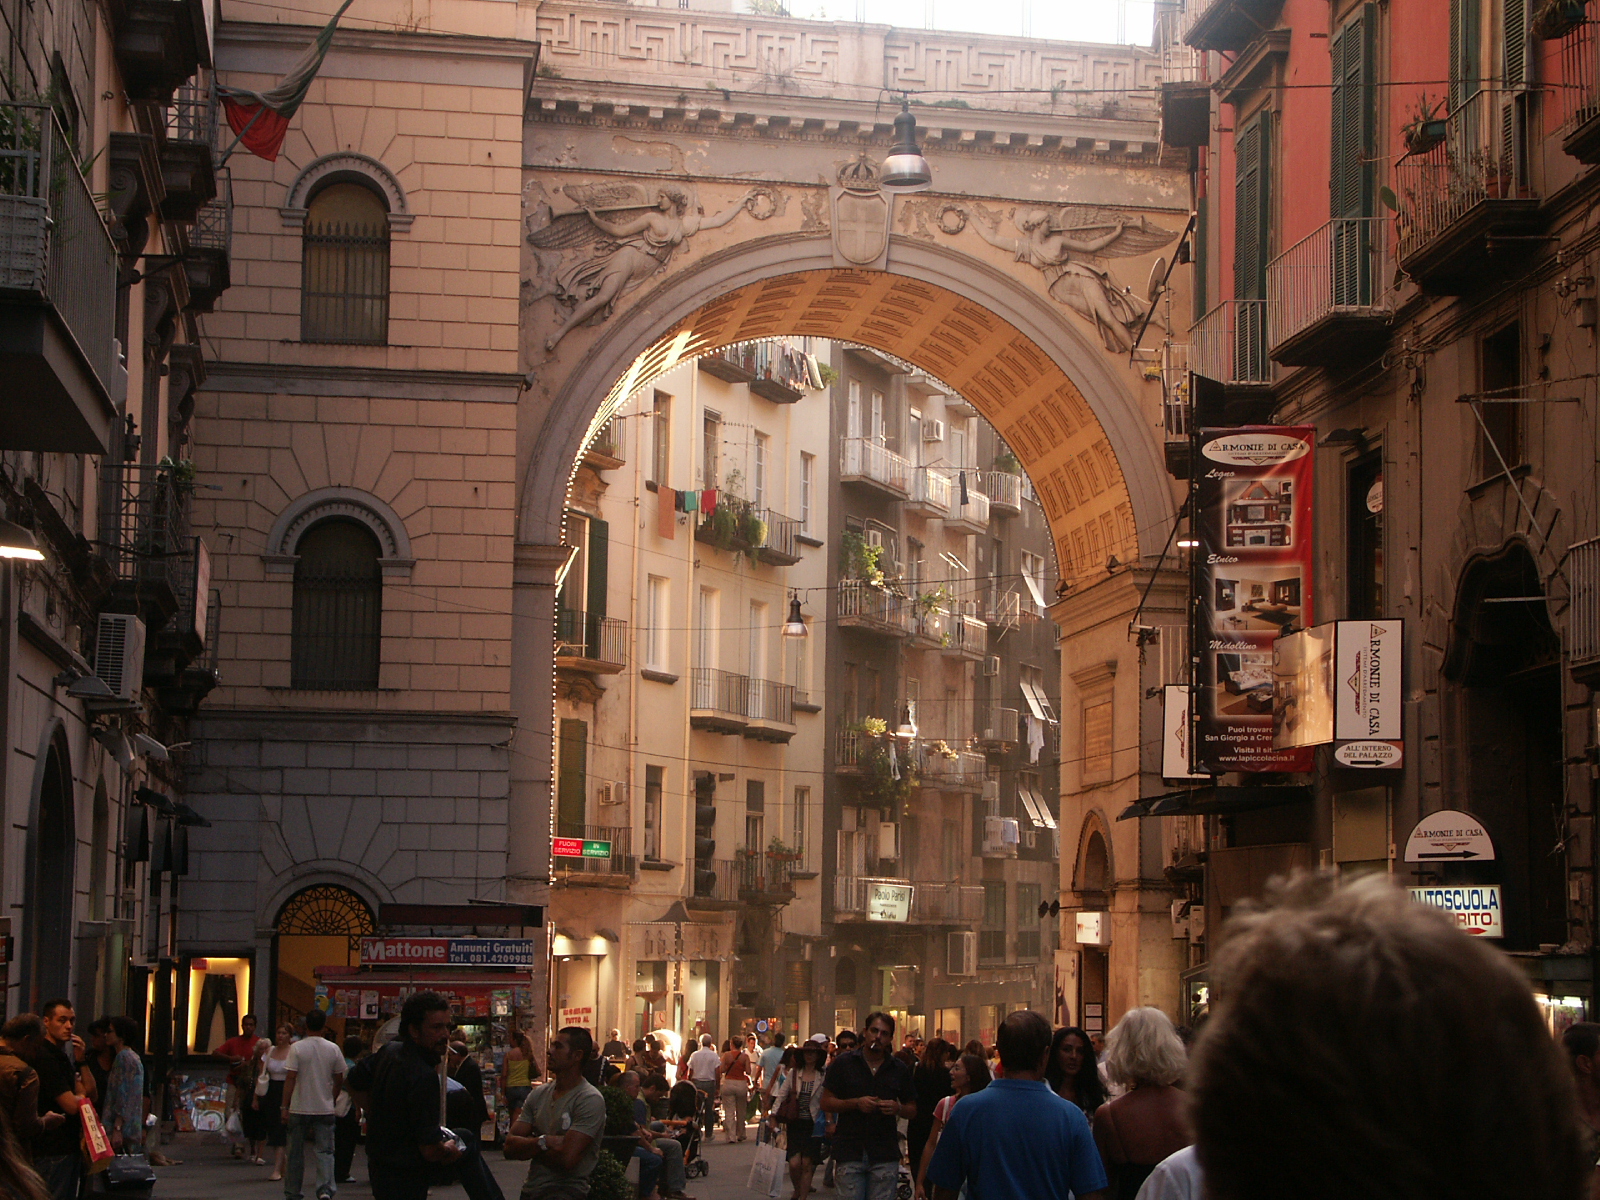 Улицы Неаполя